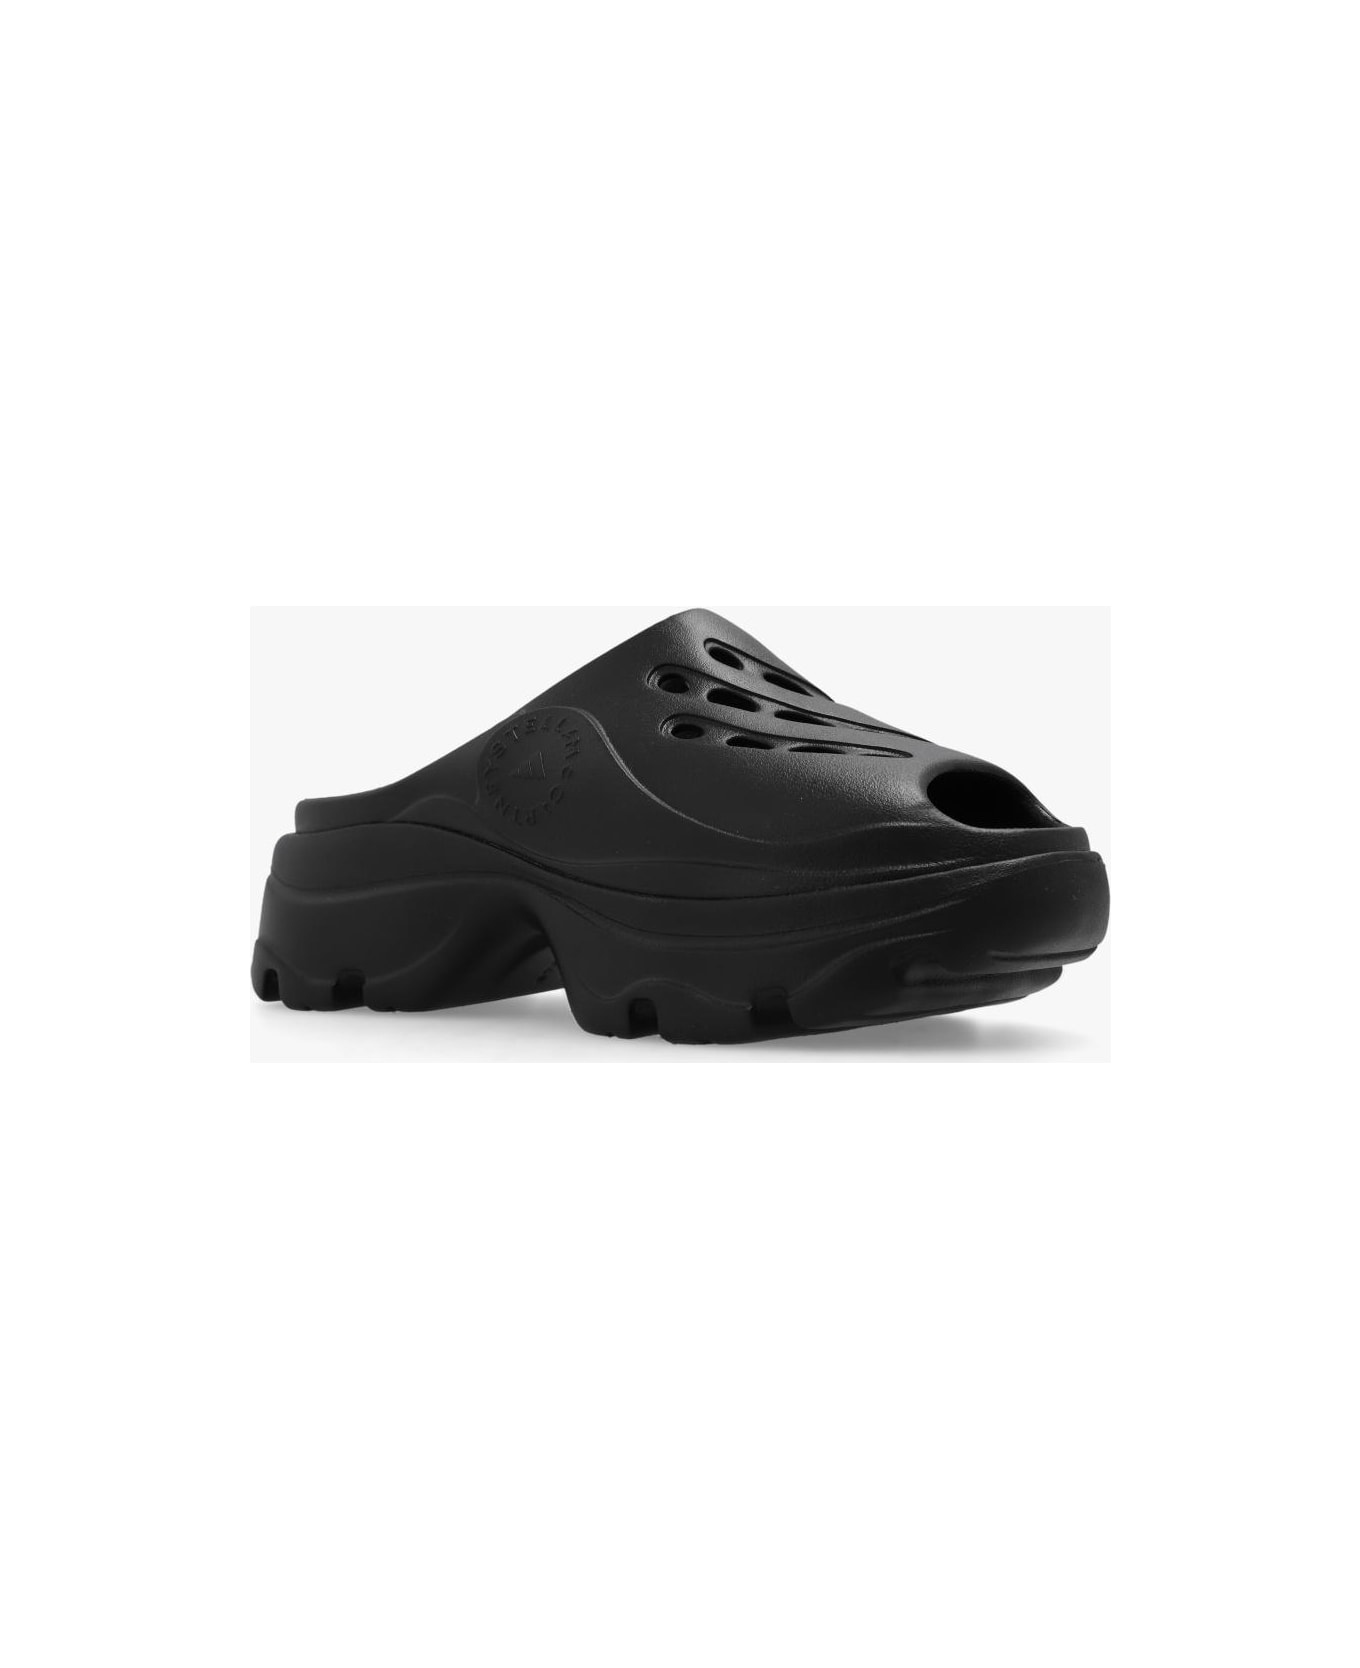 Adidas by Stella McCartney Platform Slides - COBLFTWRWHCOBLACK